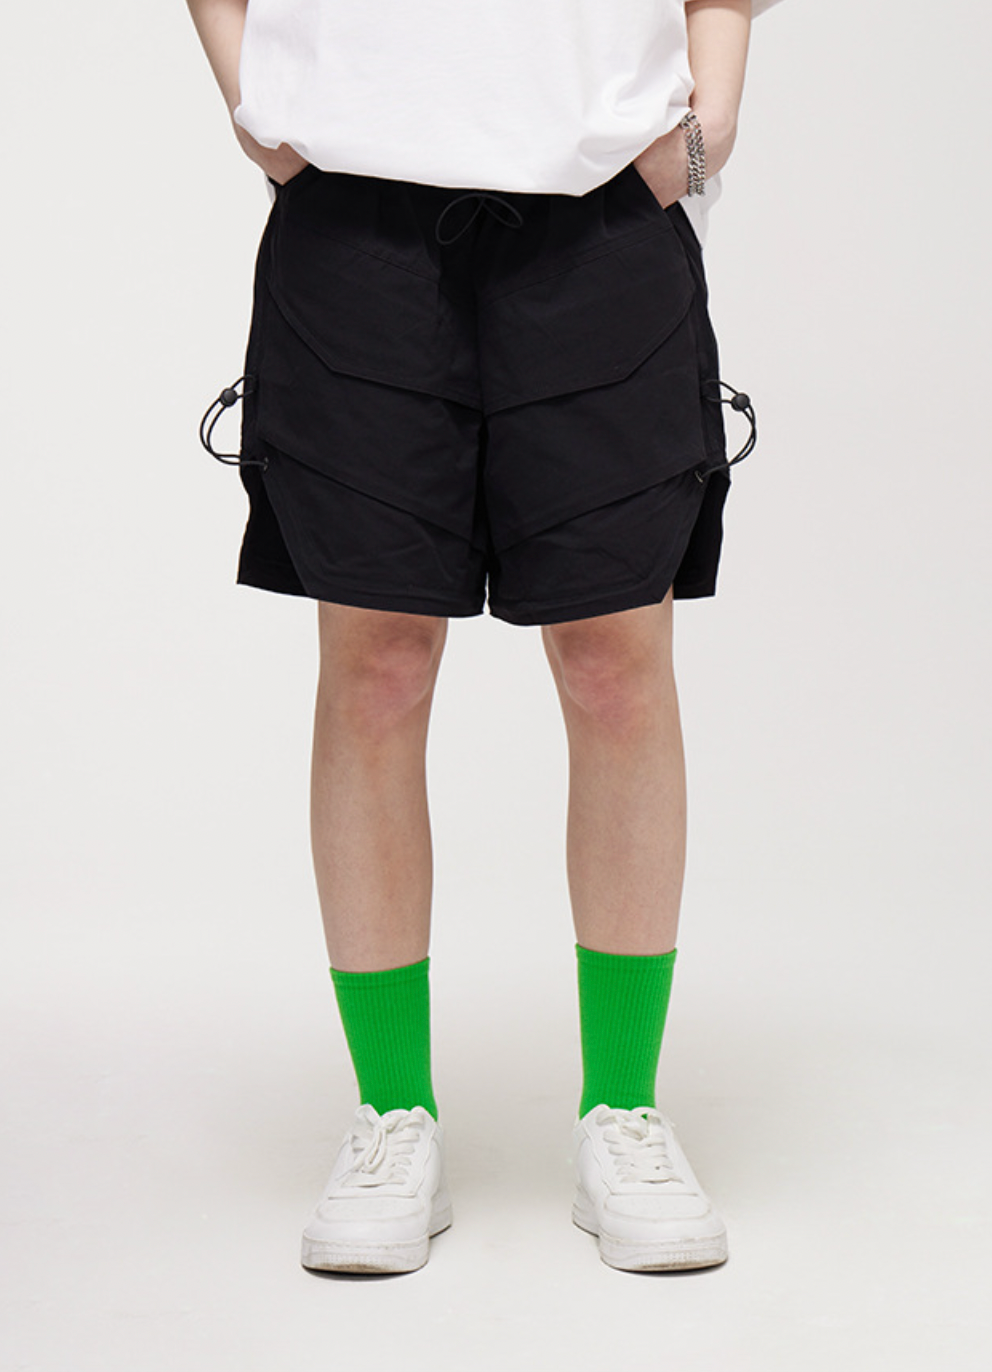 Cityboy Elastic Shorts in Black